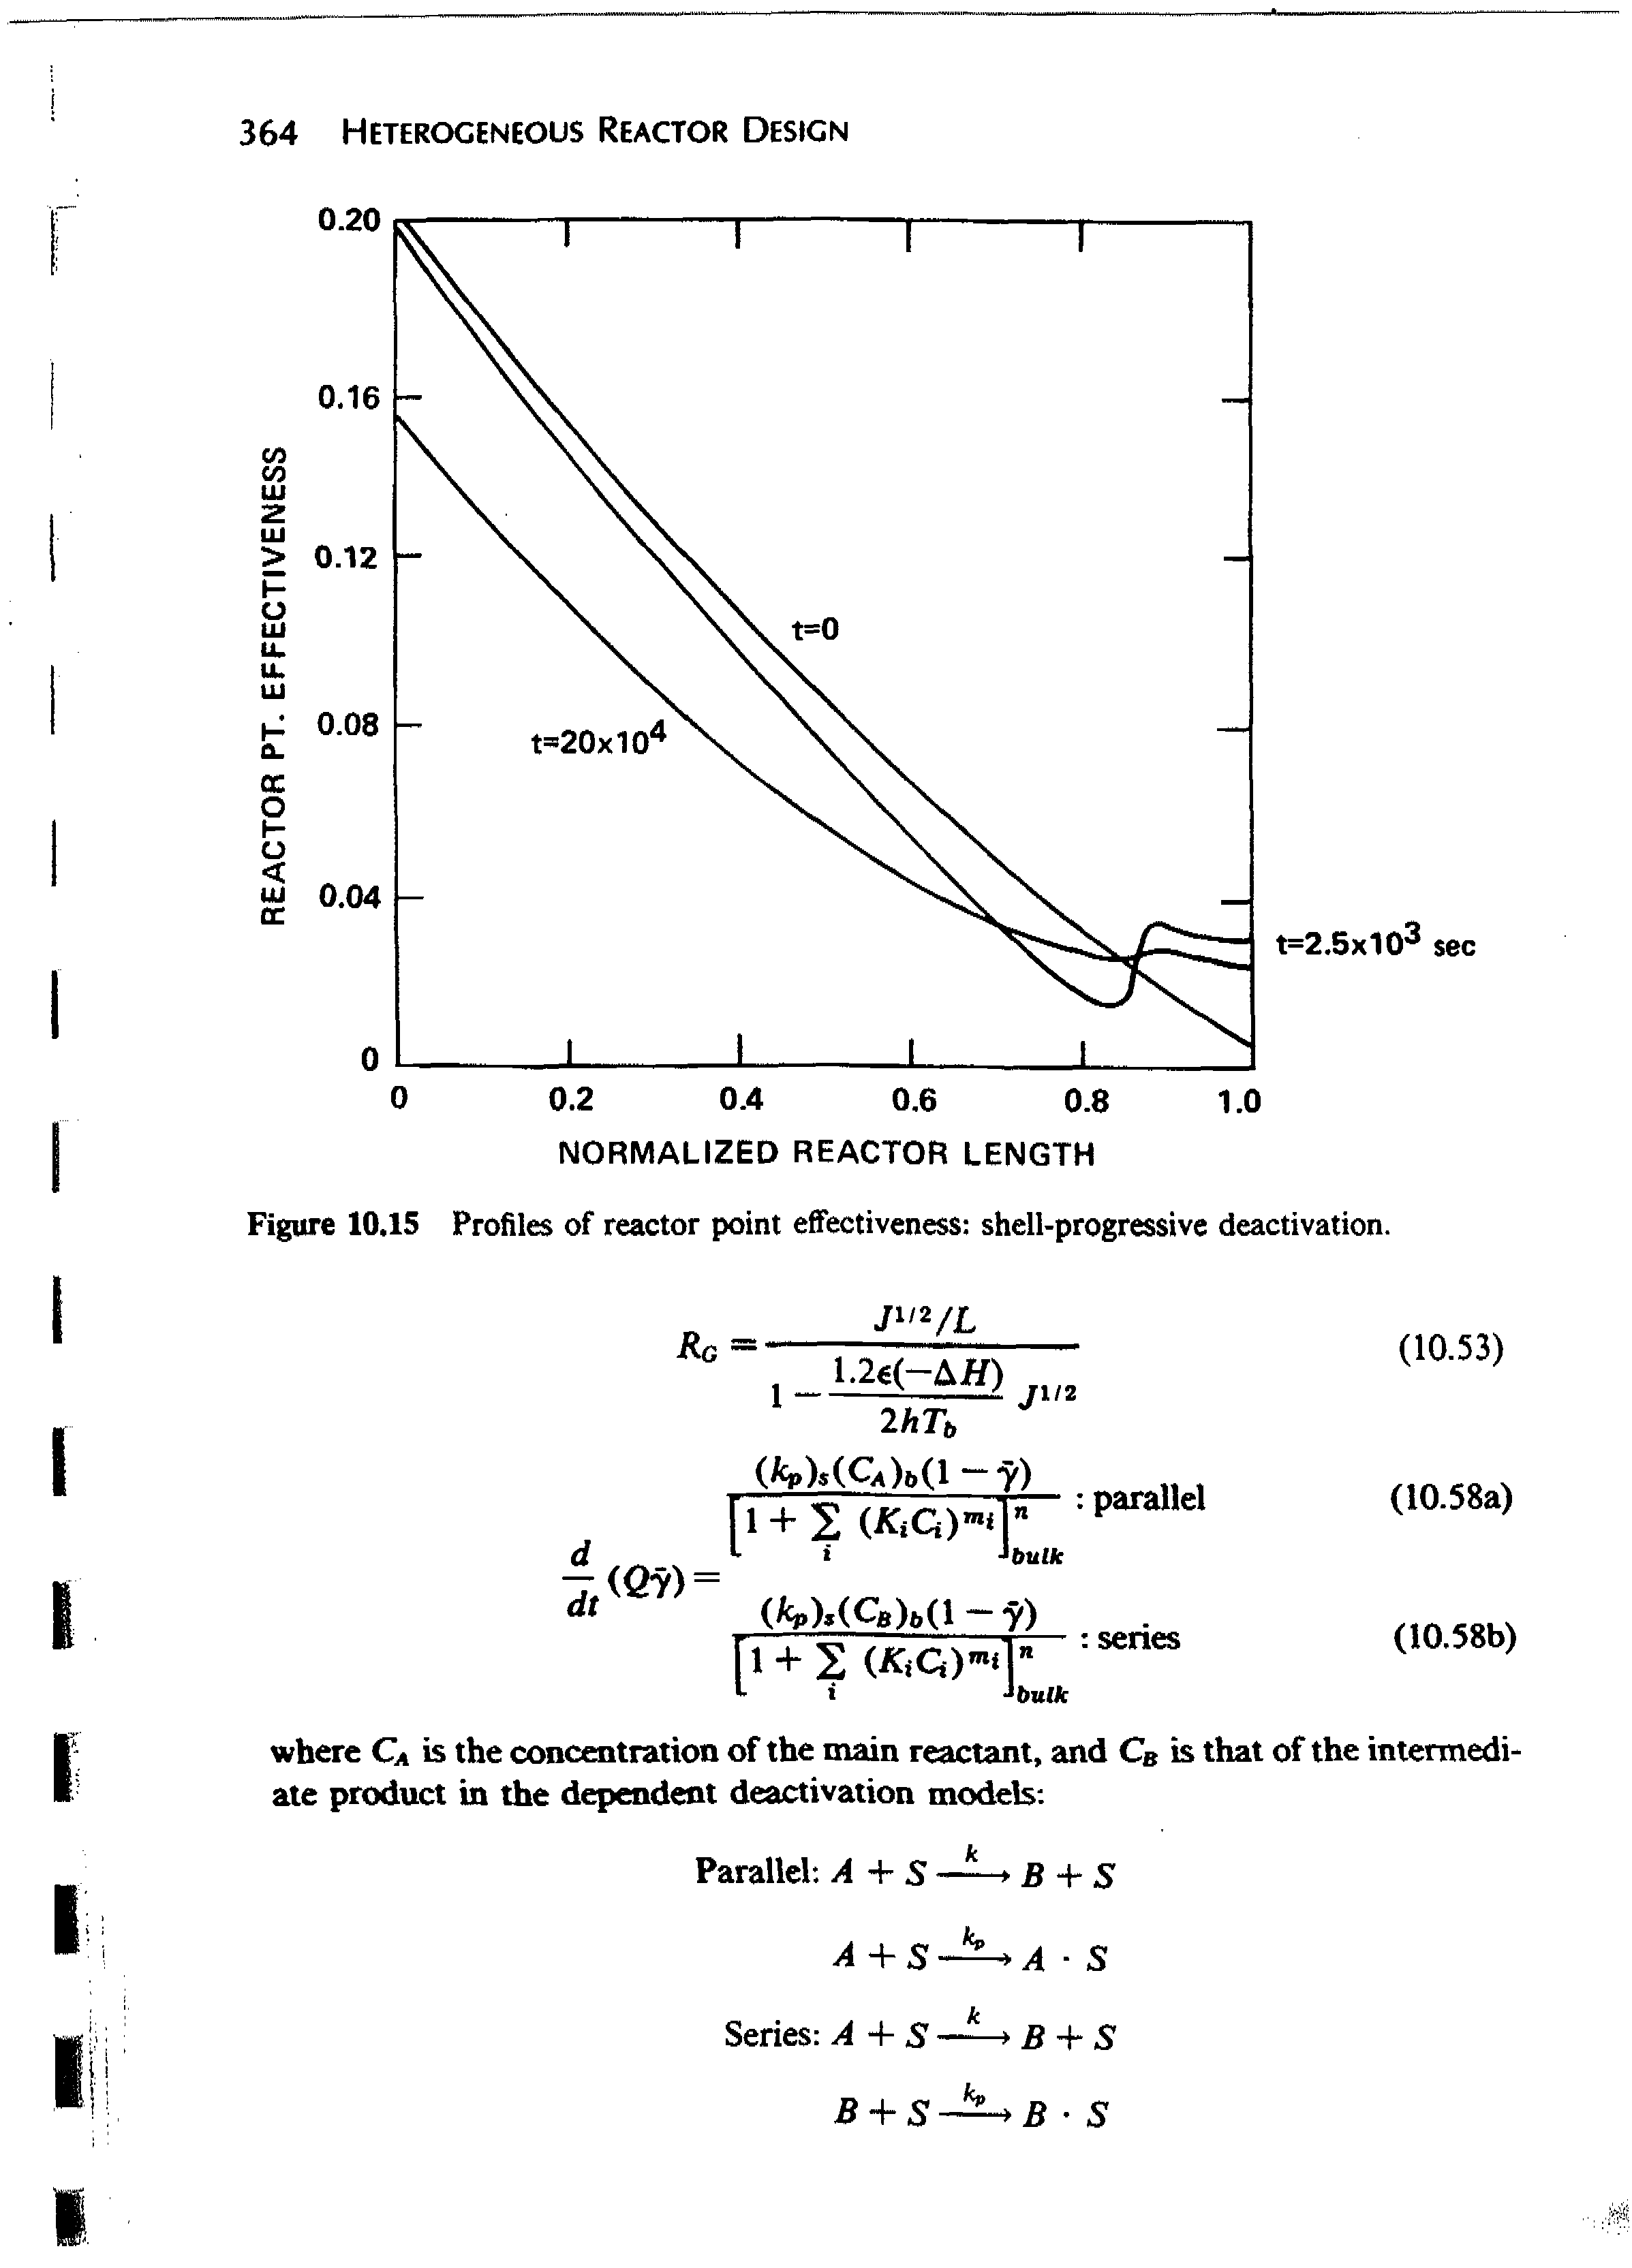 Figure 10.15 Profiles of reactor point effectiveness shell-progressive deactivation.